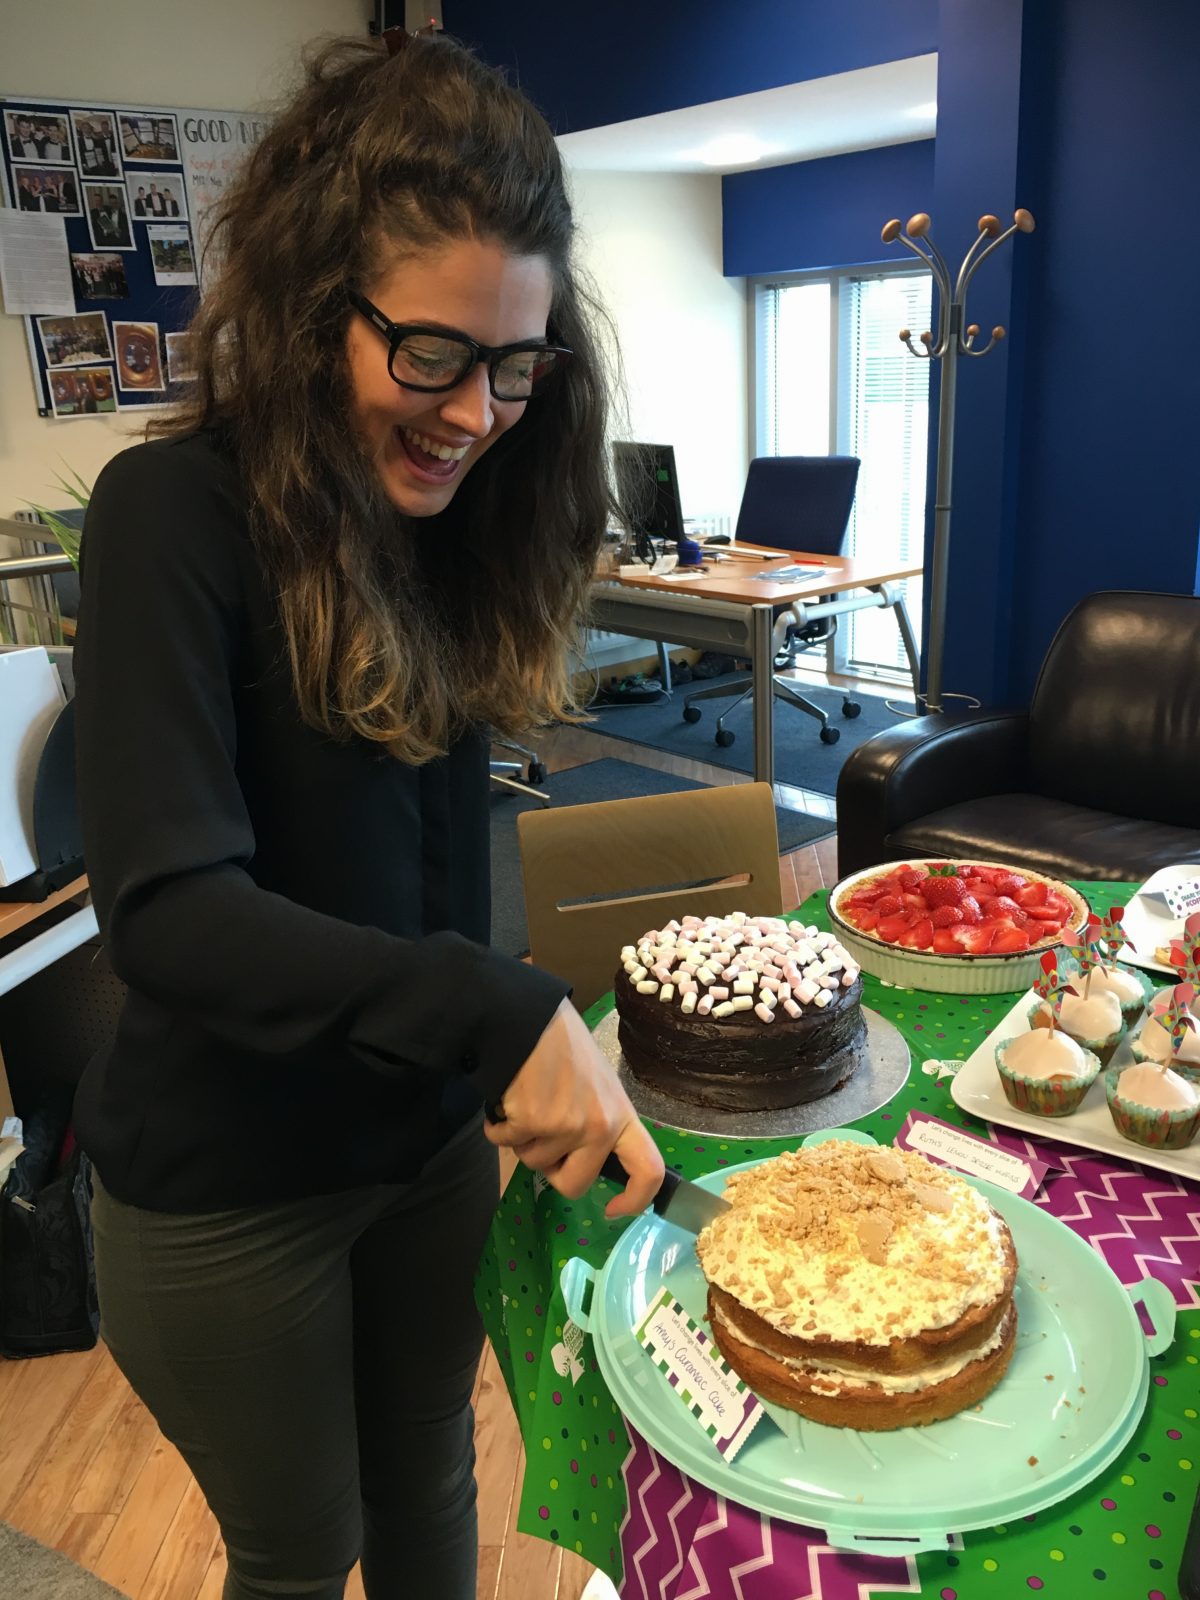 Amy cutting Cake